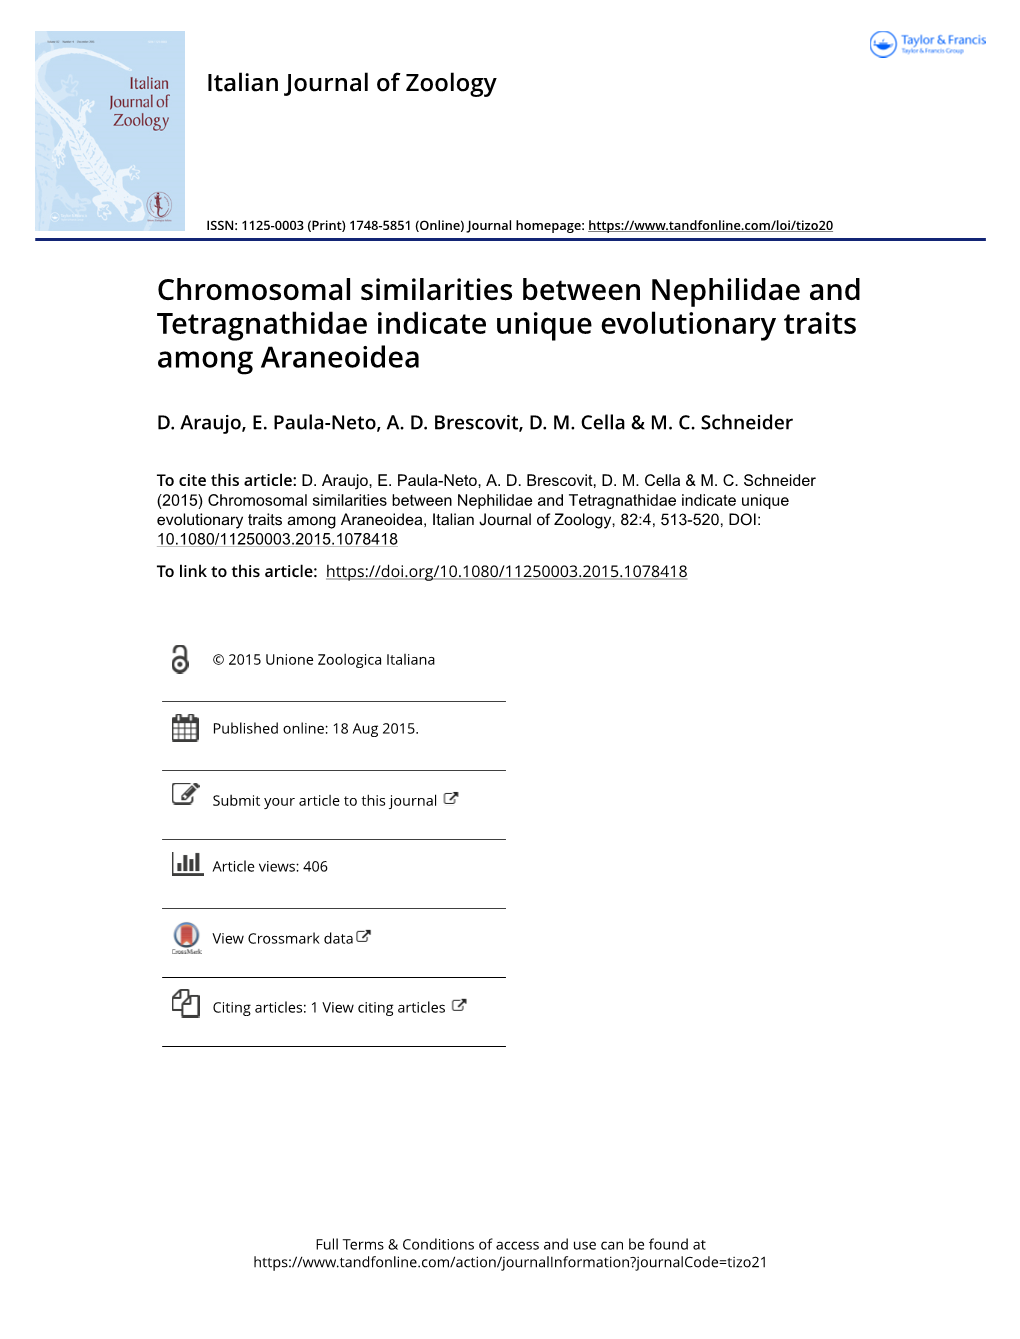 Chromosomal Similarities Between Nephilidae and Tetragnathidae Indicate Unique Evolutionary Traits Among Araneoidea